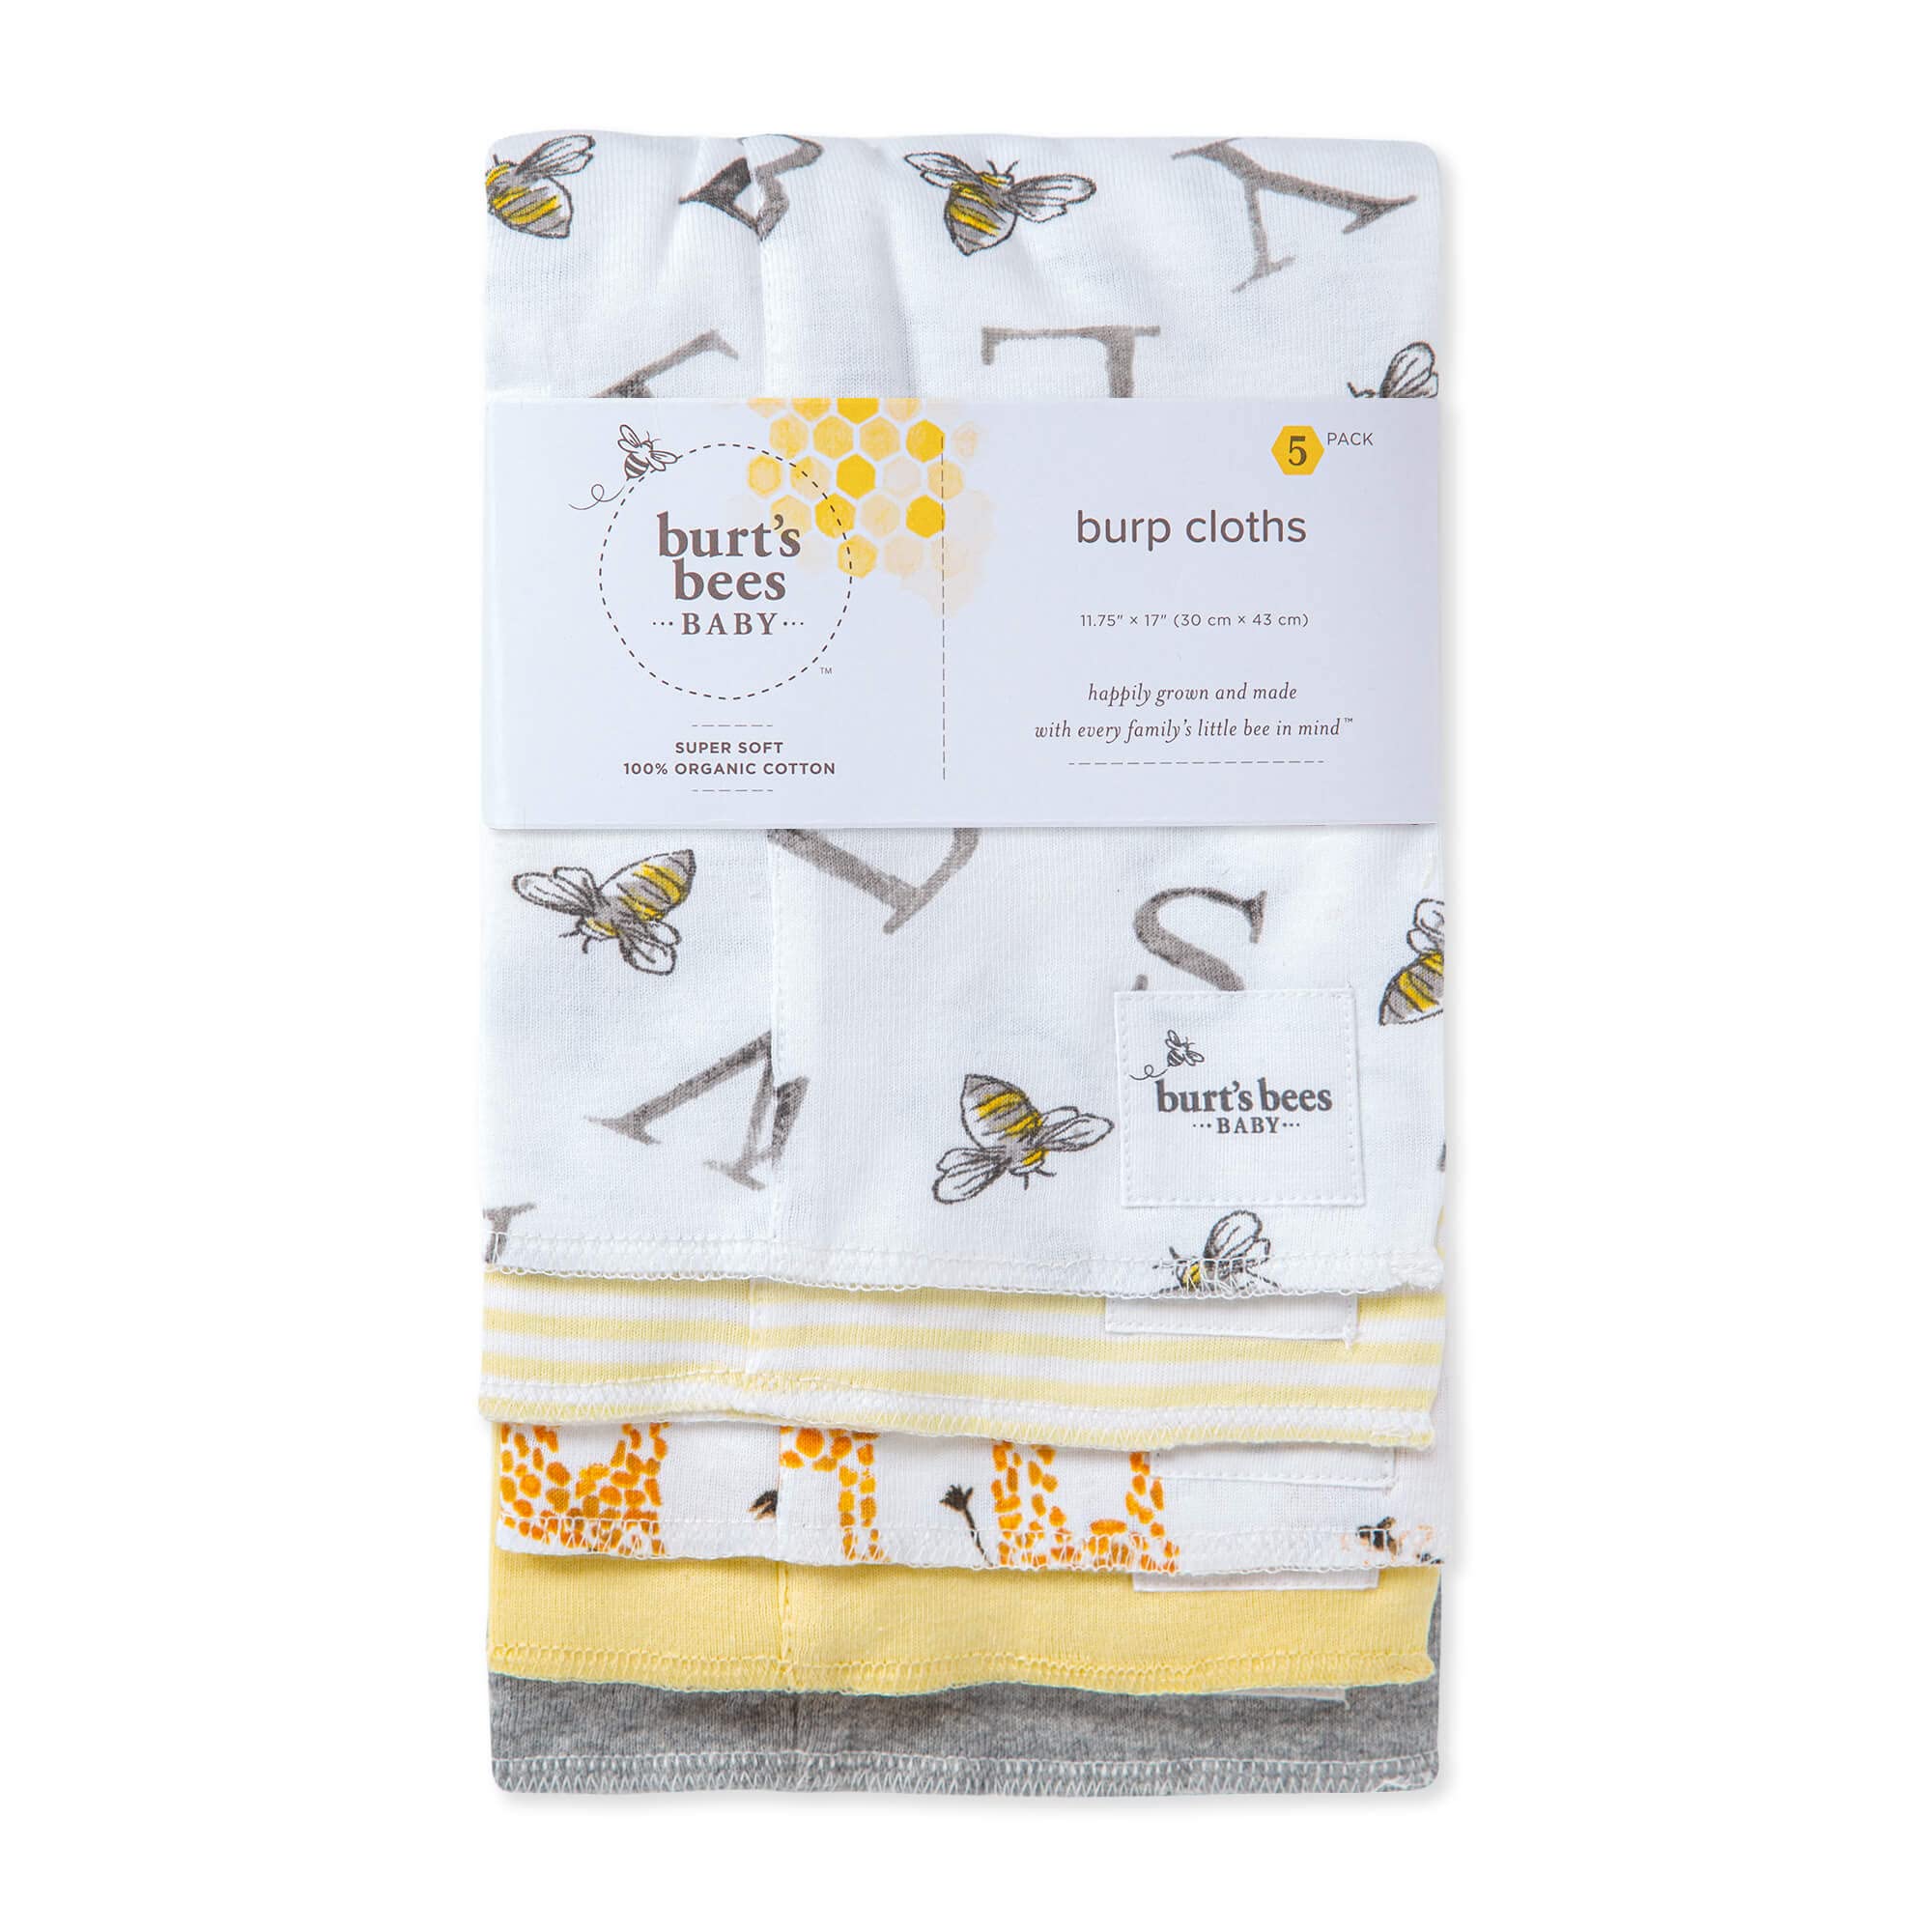 Burt's Bees Baby - Burp Cloths, 5-Pack Extra Absorbent 100% Organic Cotton Drool Cloths